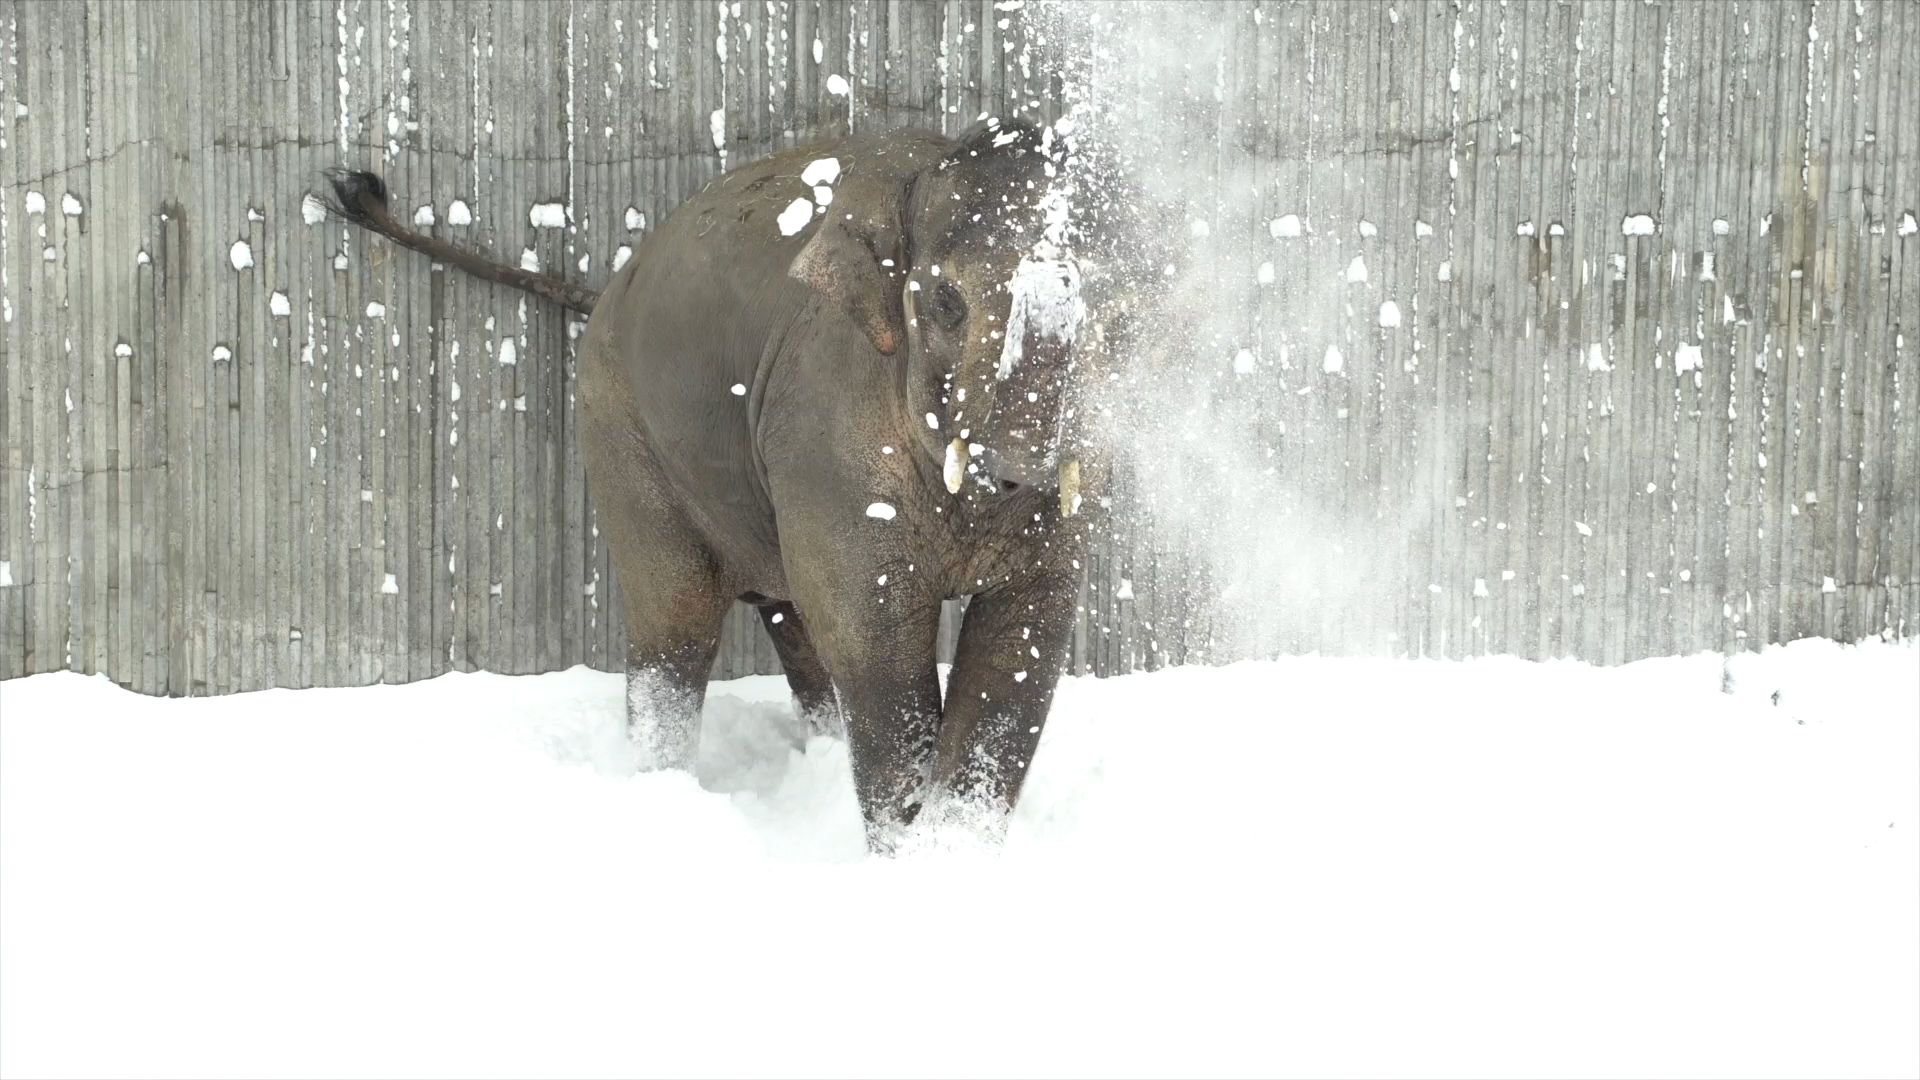 Elephant enjoys snow at the Oregon Zoo | CNN